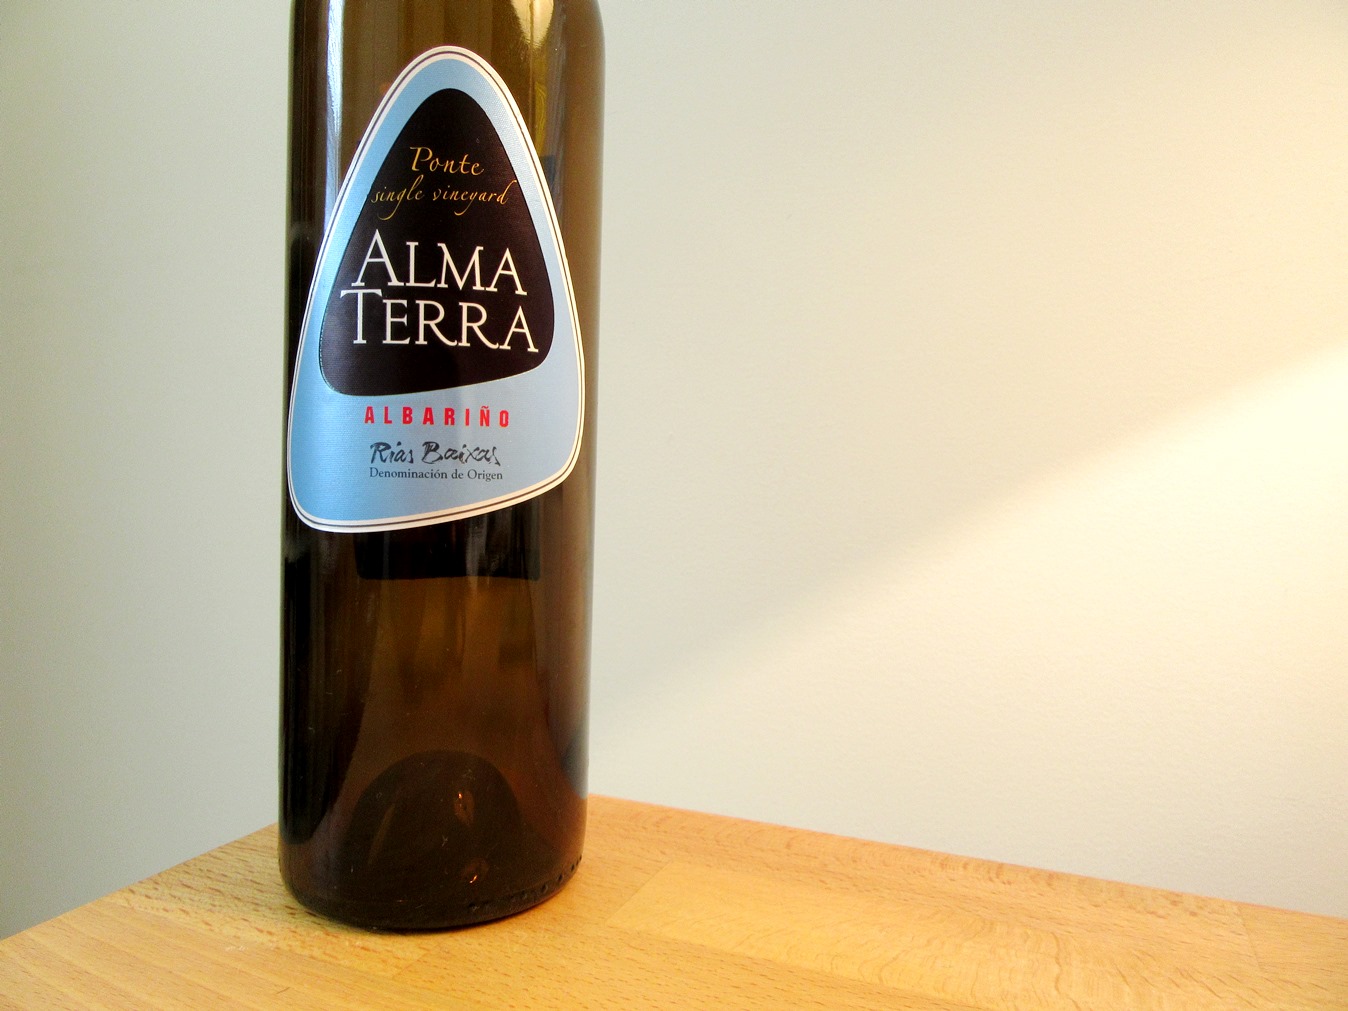 Alma Terra, Ponte Single Vineyard Albariño 2015, Rias Baixas, Spain, Wine Casual